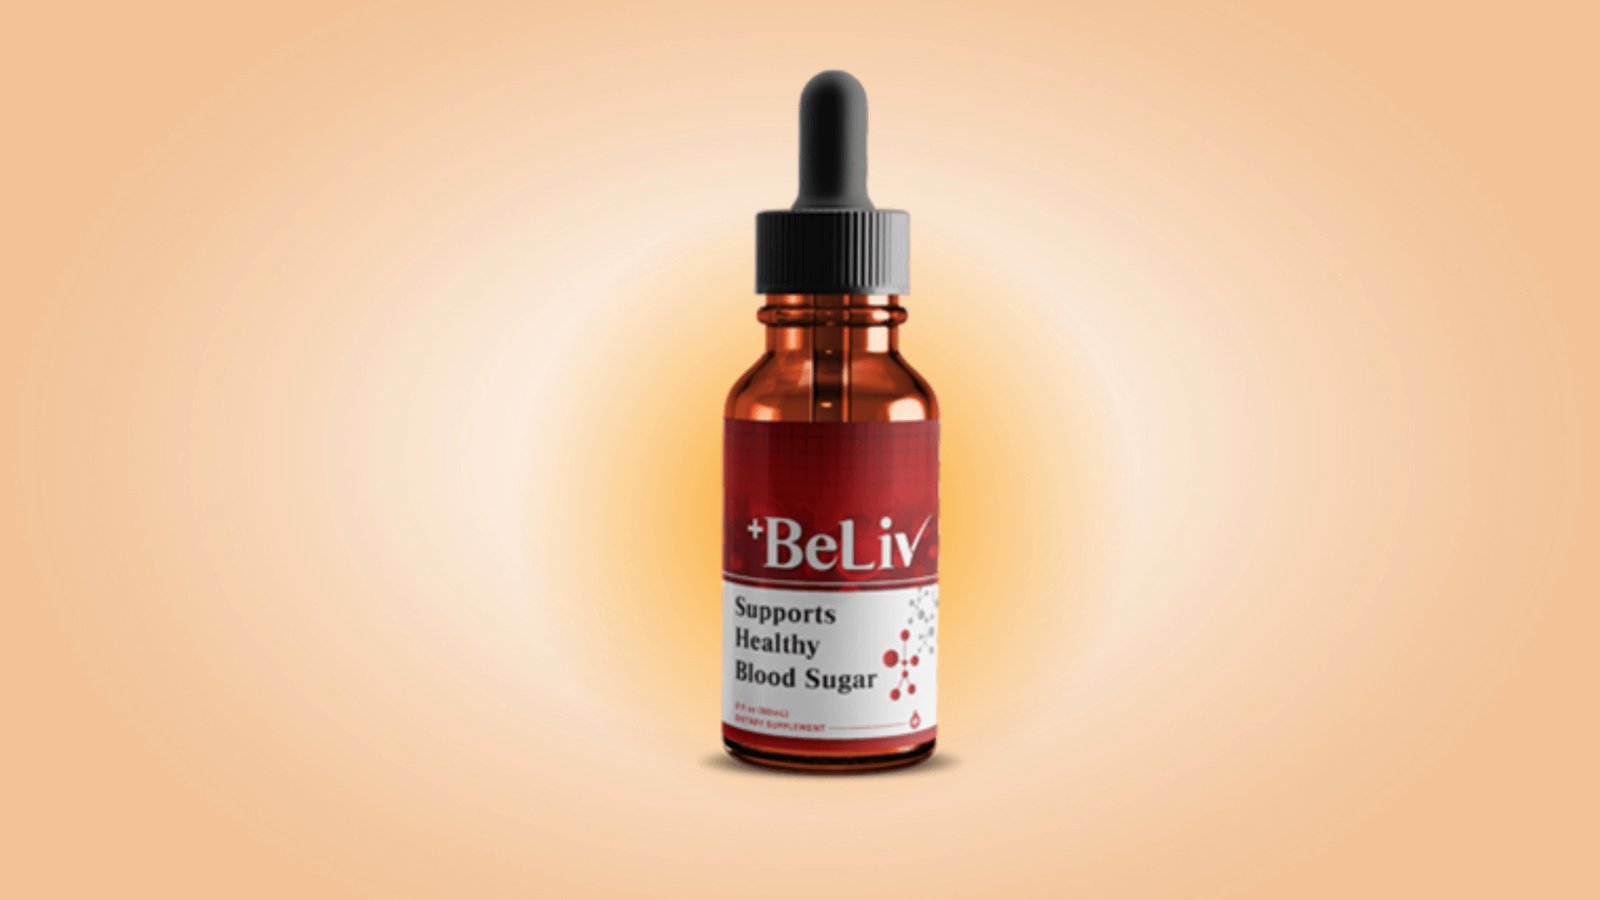 BeLiv Blood Sugar Oil Reviews